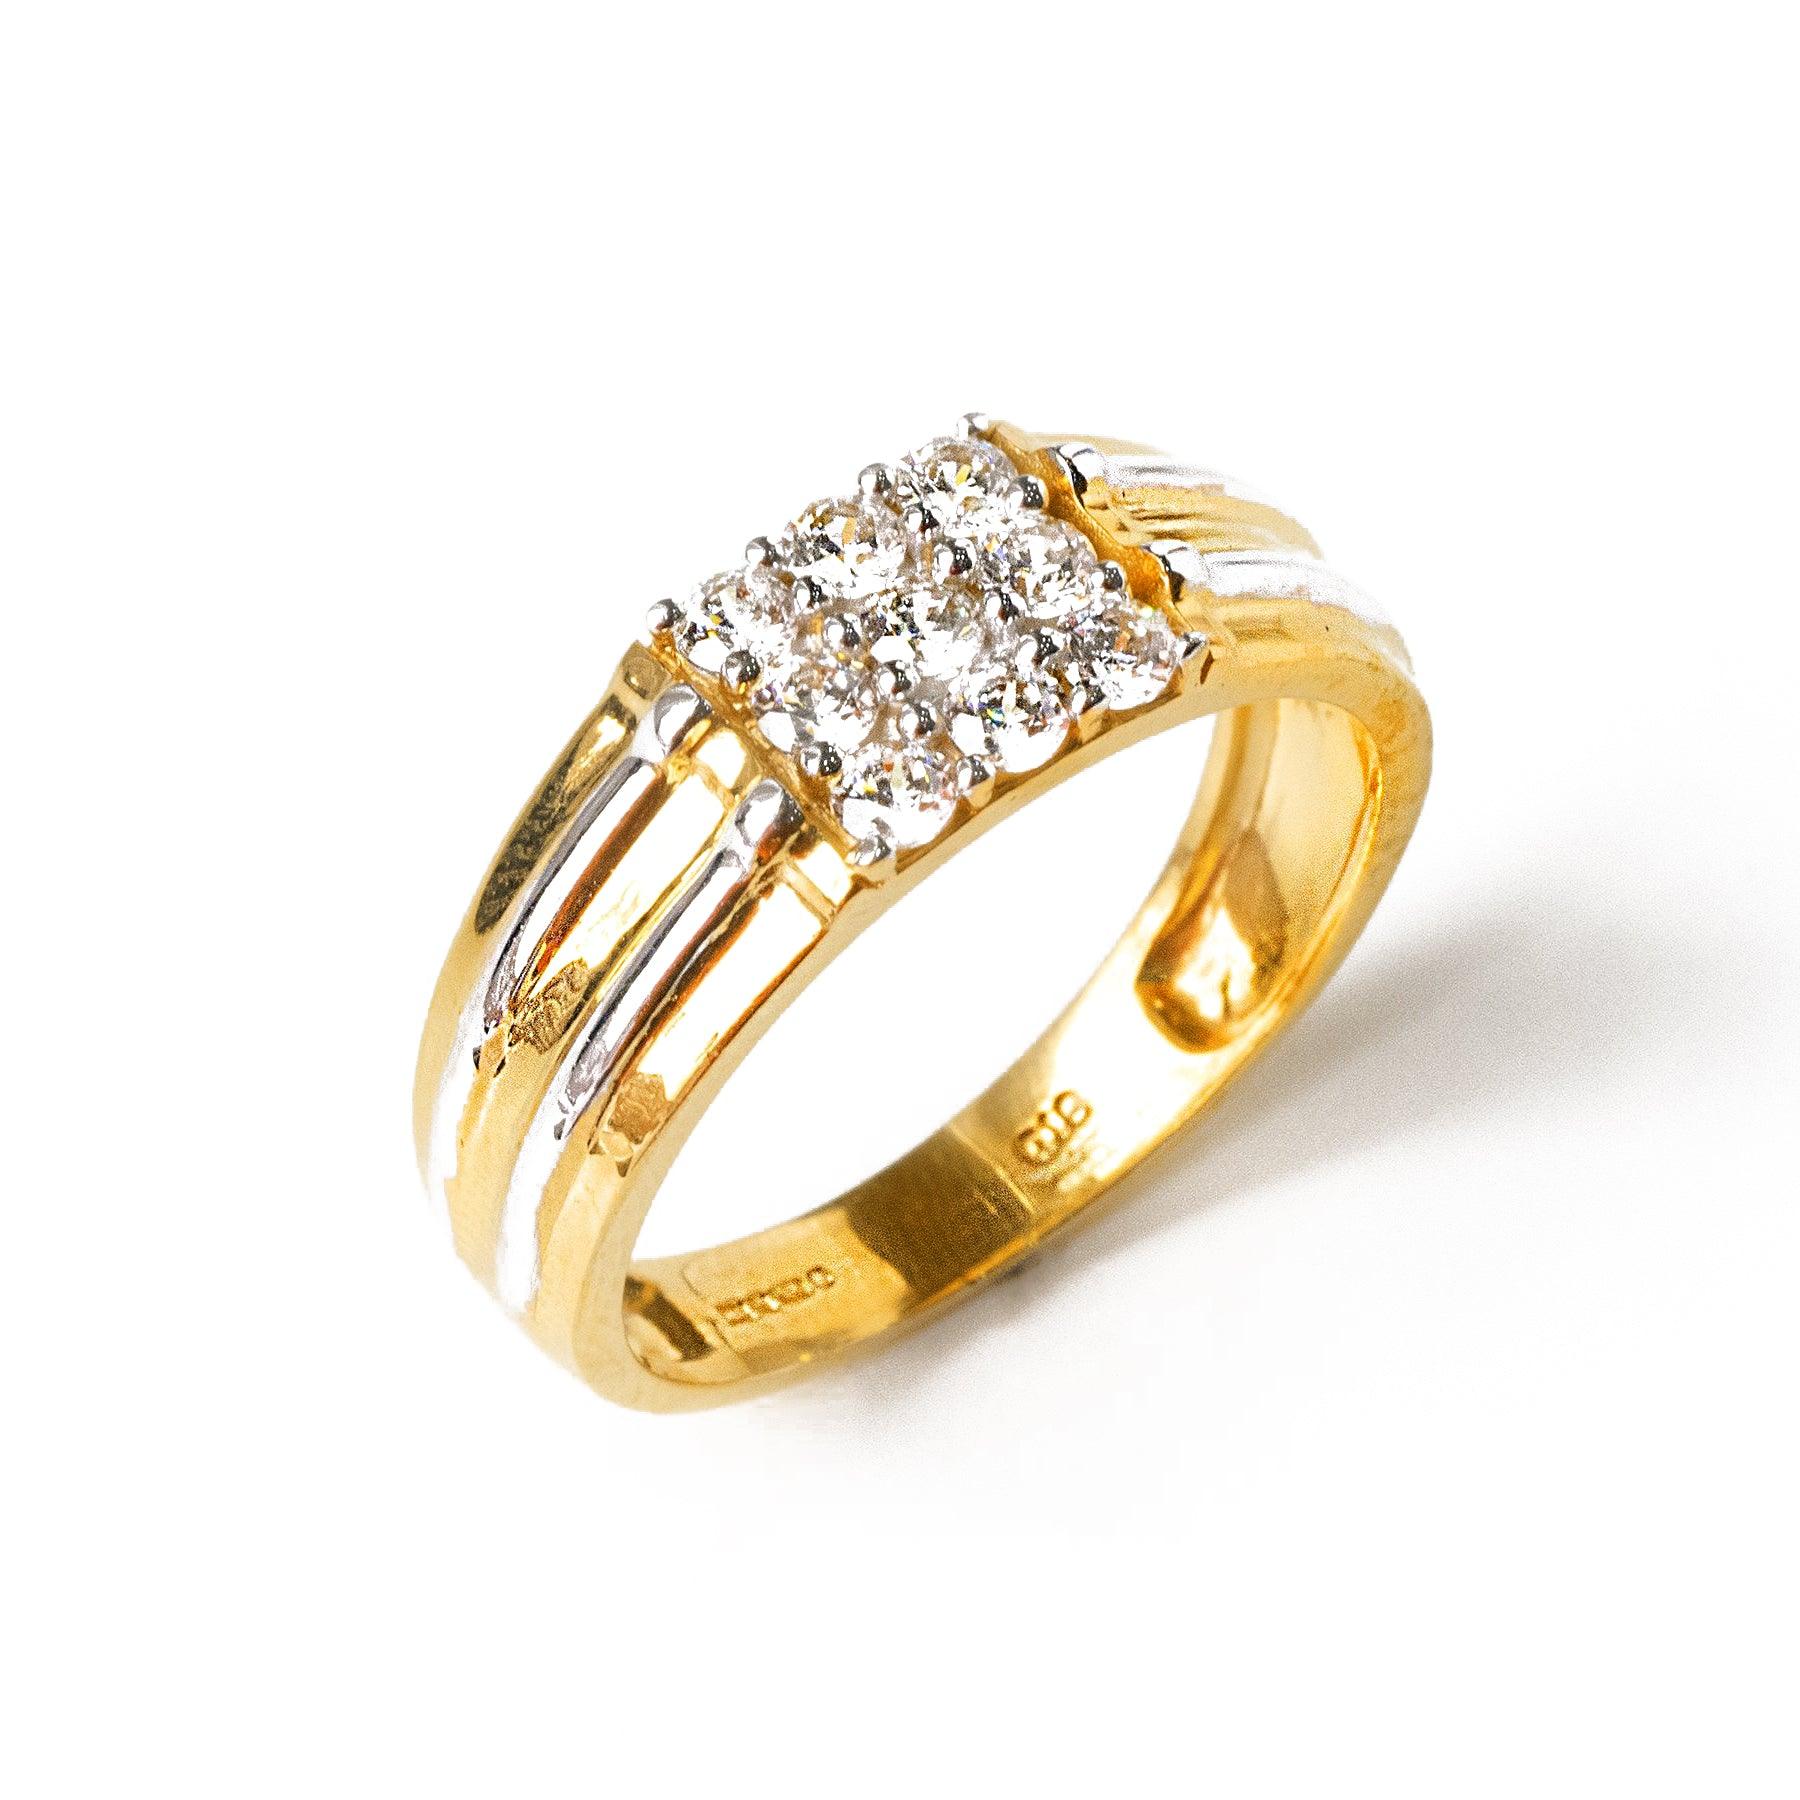 22ct Gold Gents Ring set with Swarovski Zirconias (6.04g) GR14140